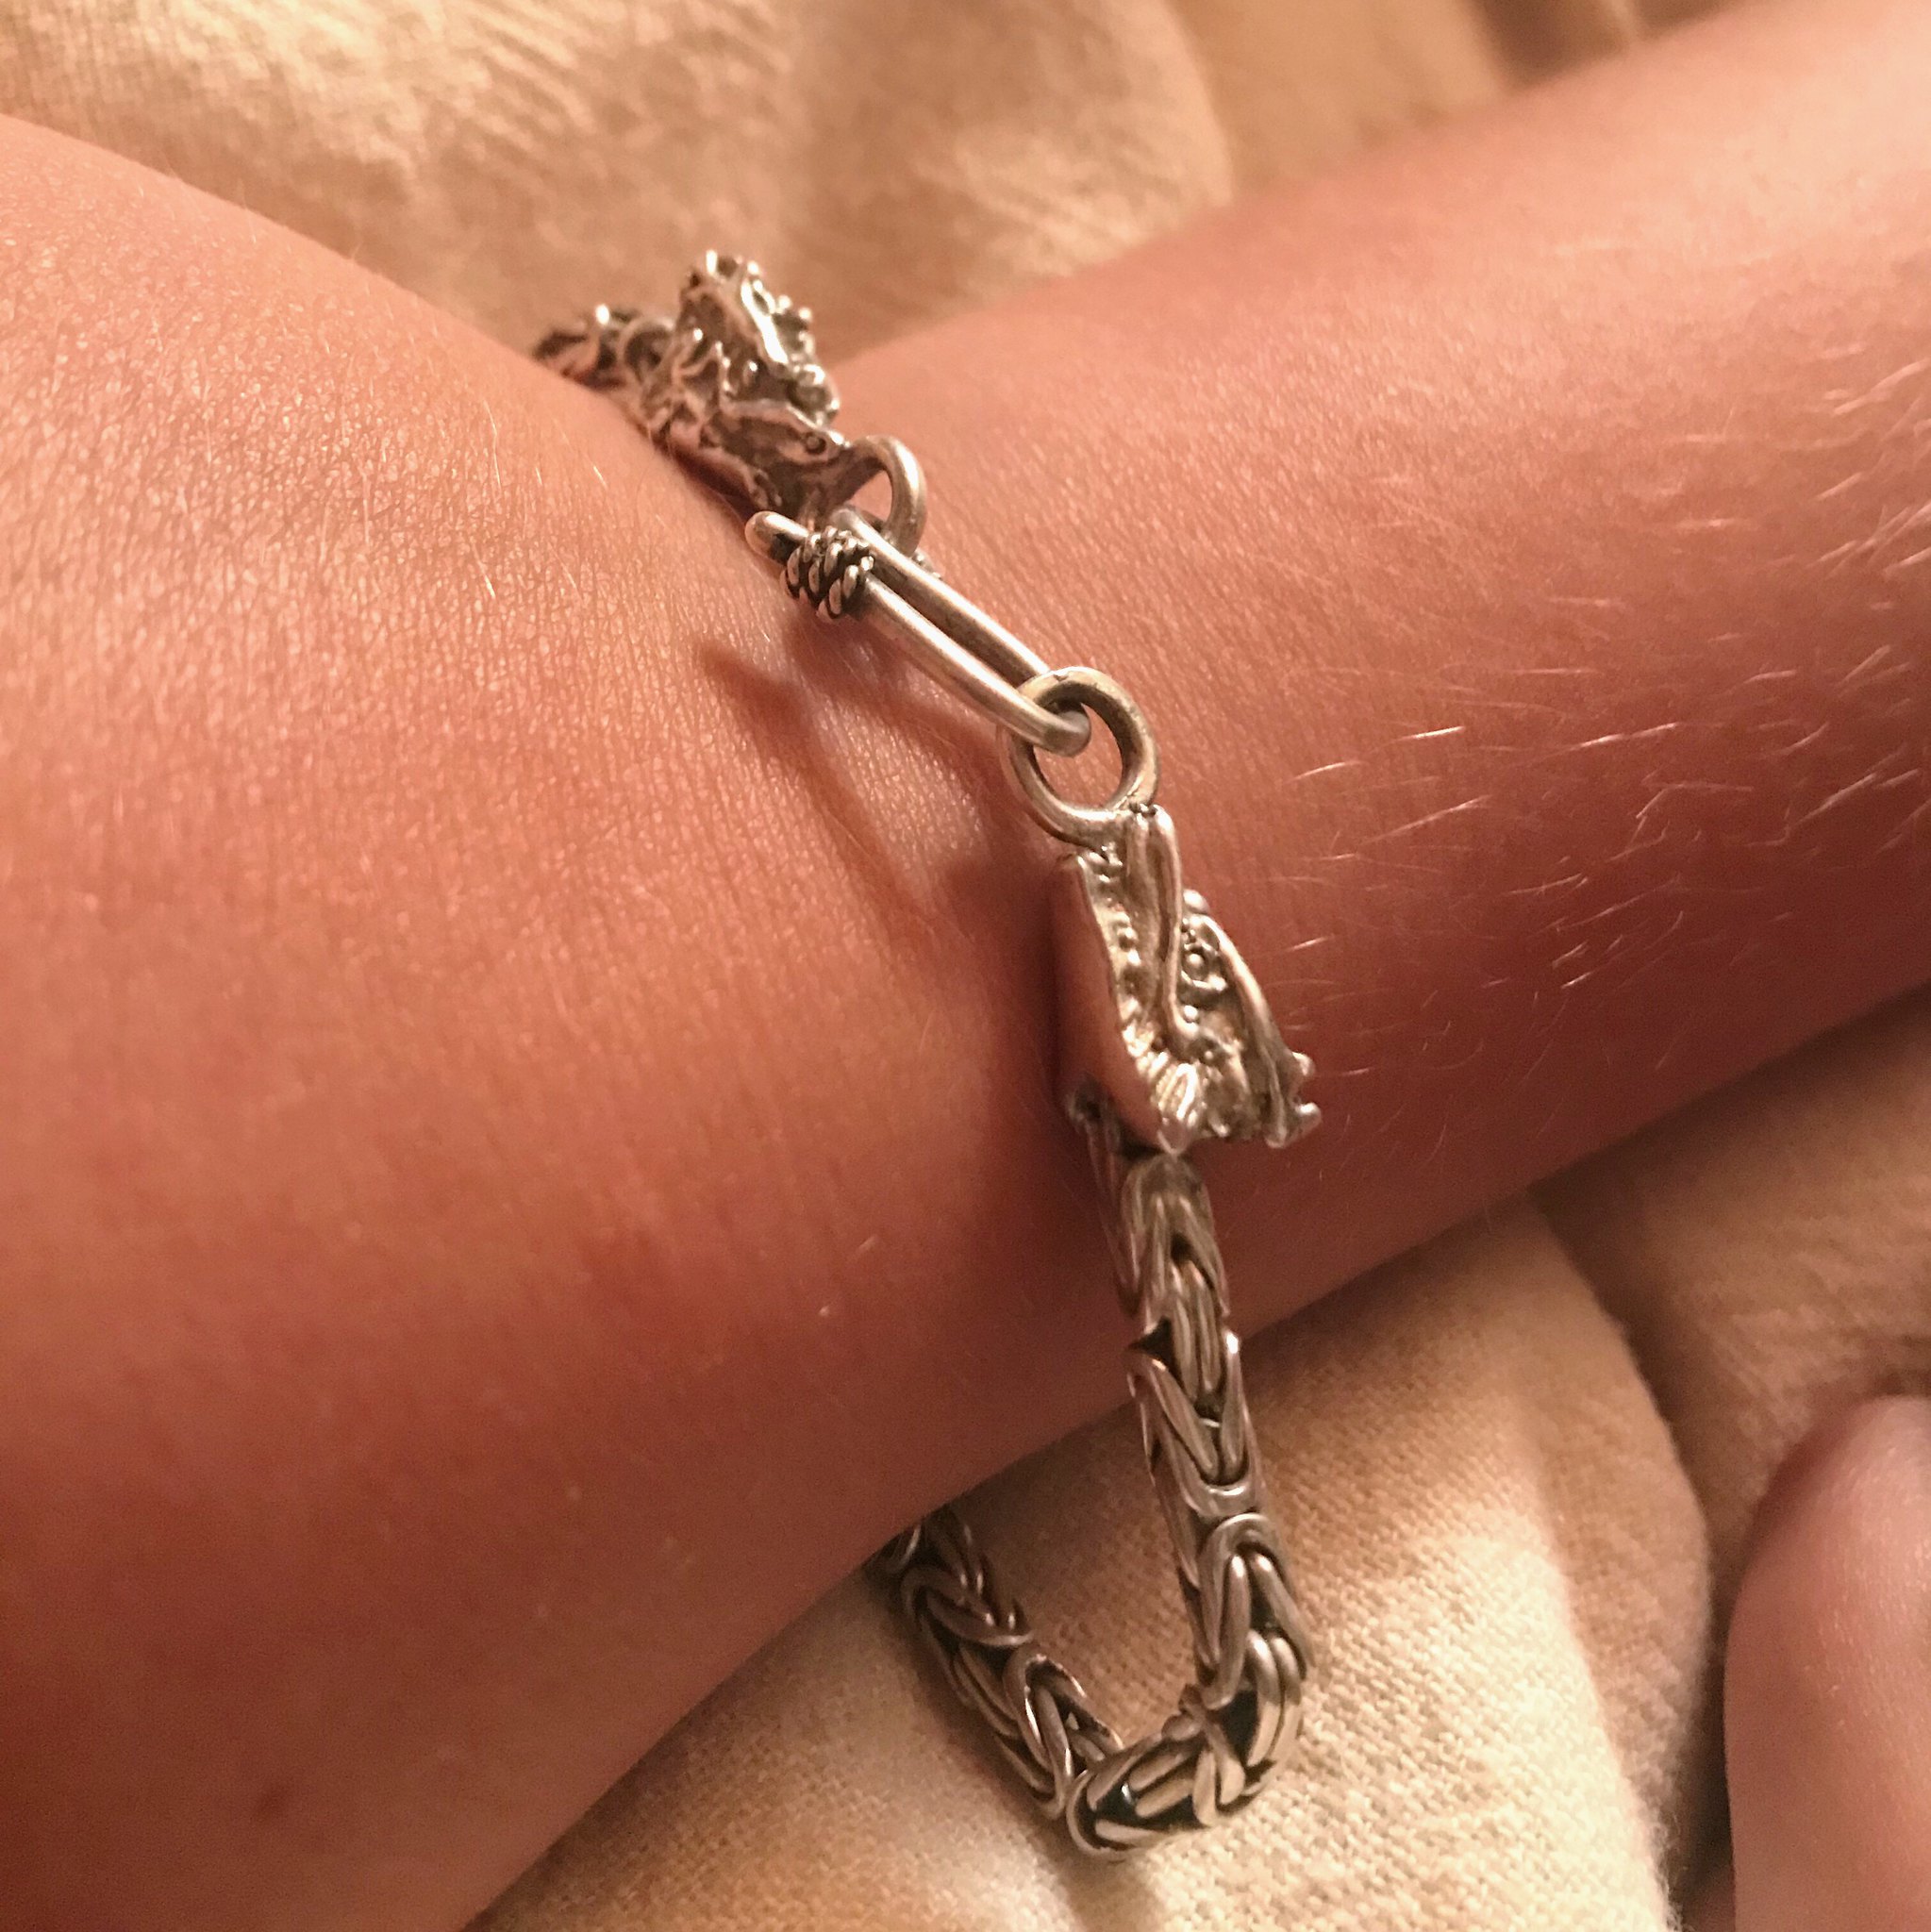 Casper's silver dragon bracelet